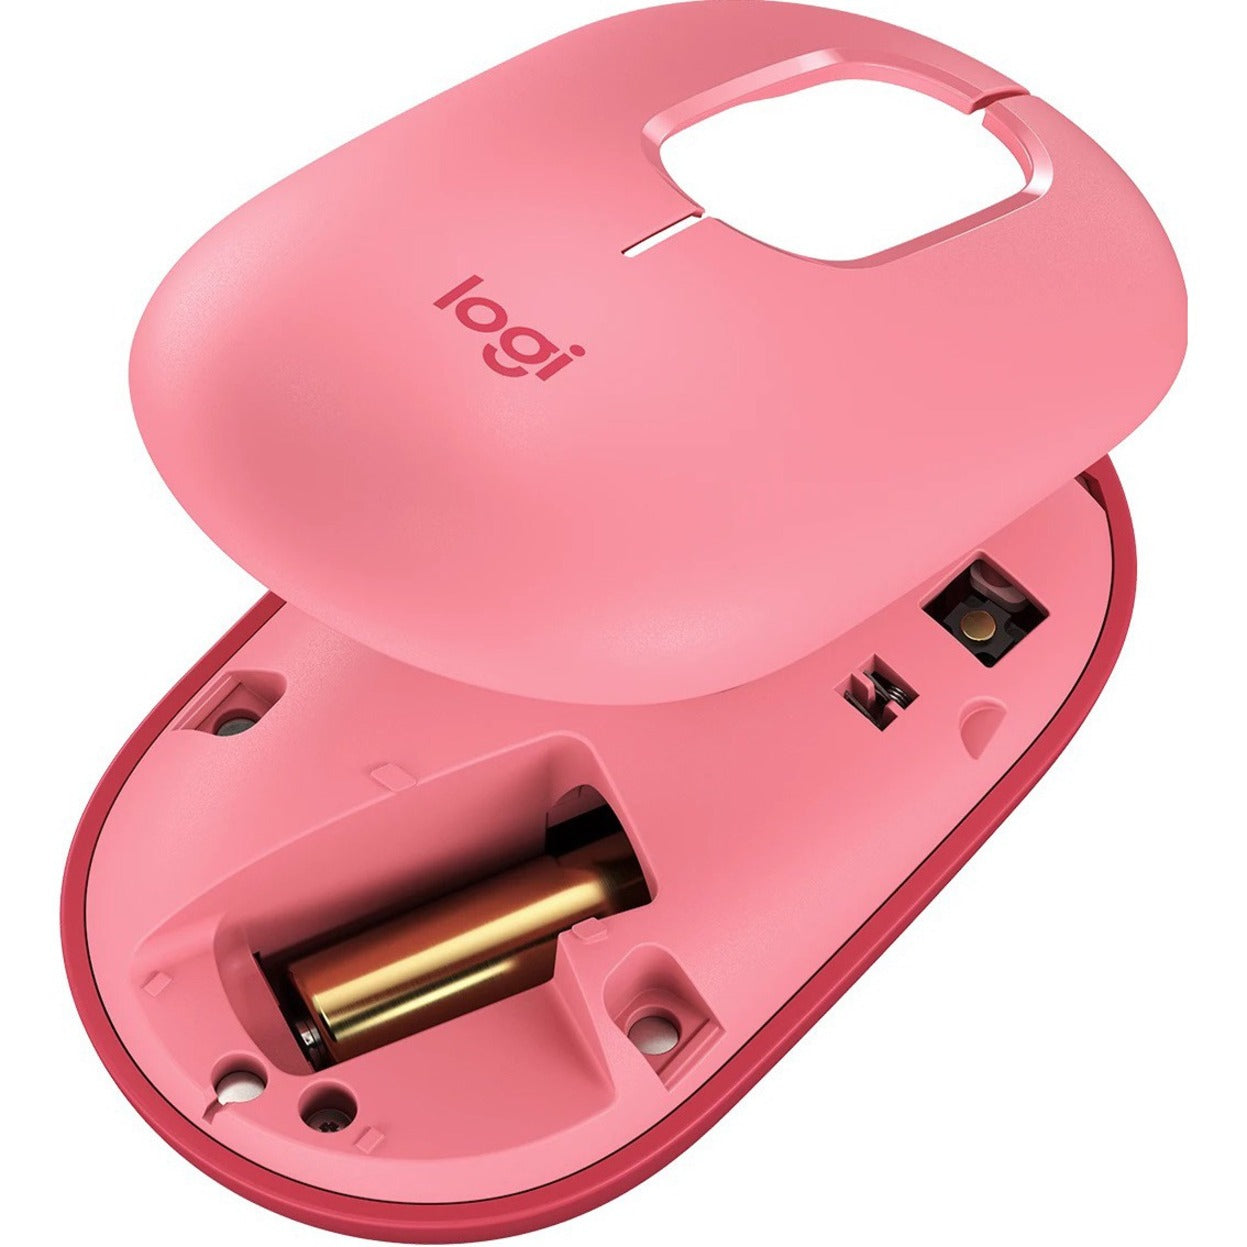 Logitech 910-006545 POP Mouse with emoji - Heartbreaker Rose, Wireless Bluetooth Mouse with Scroll Wheel